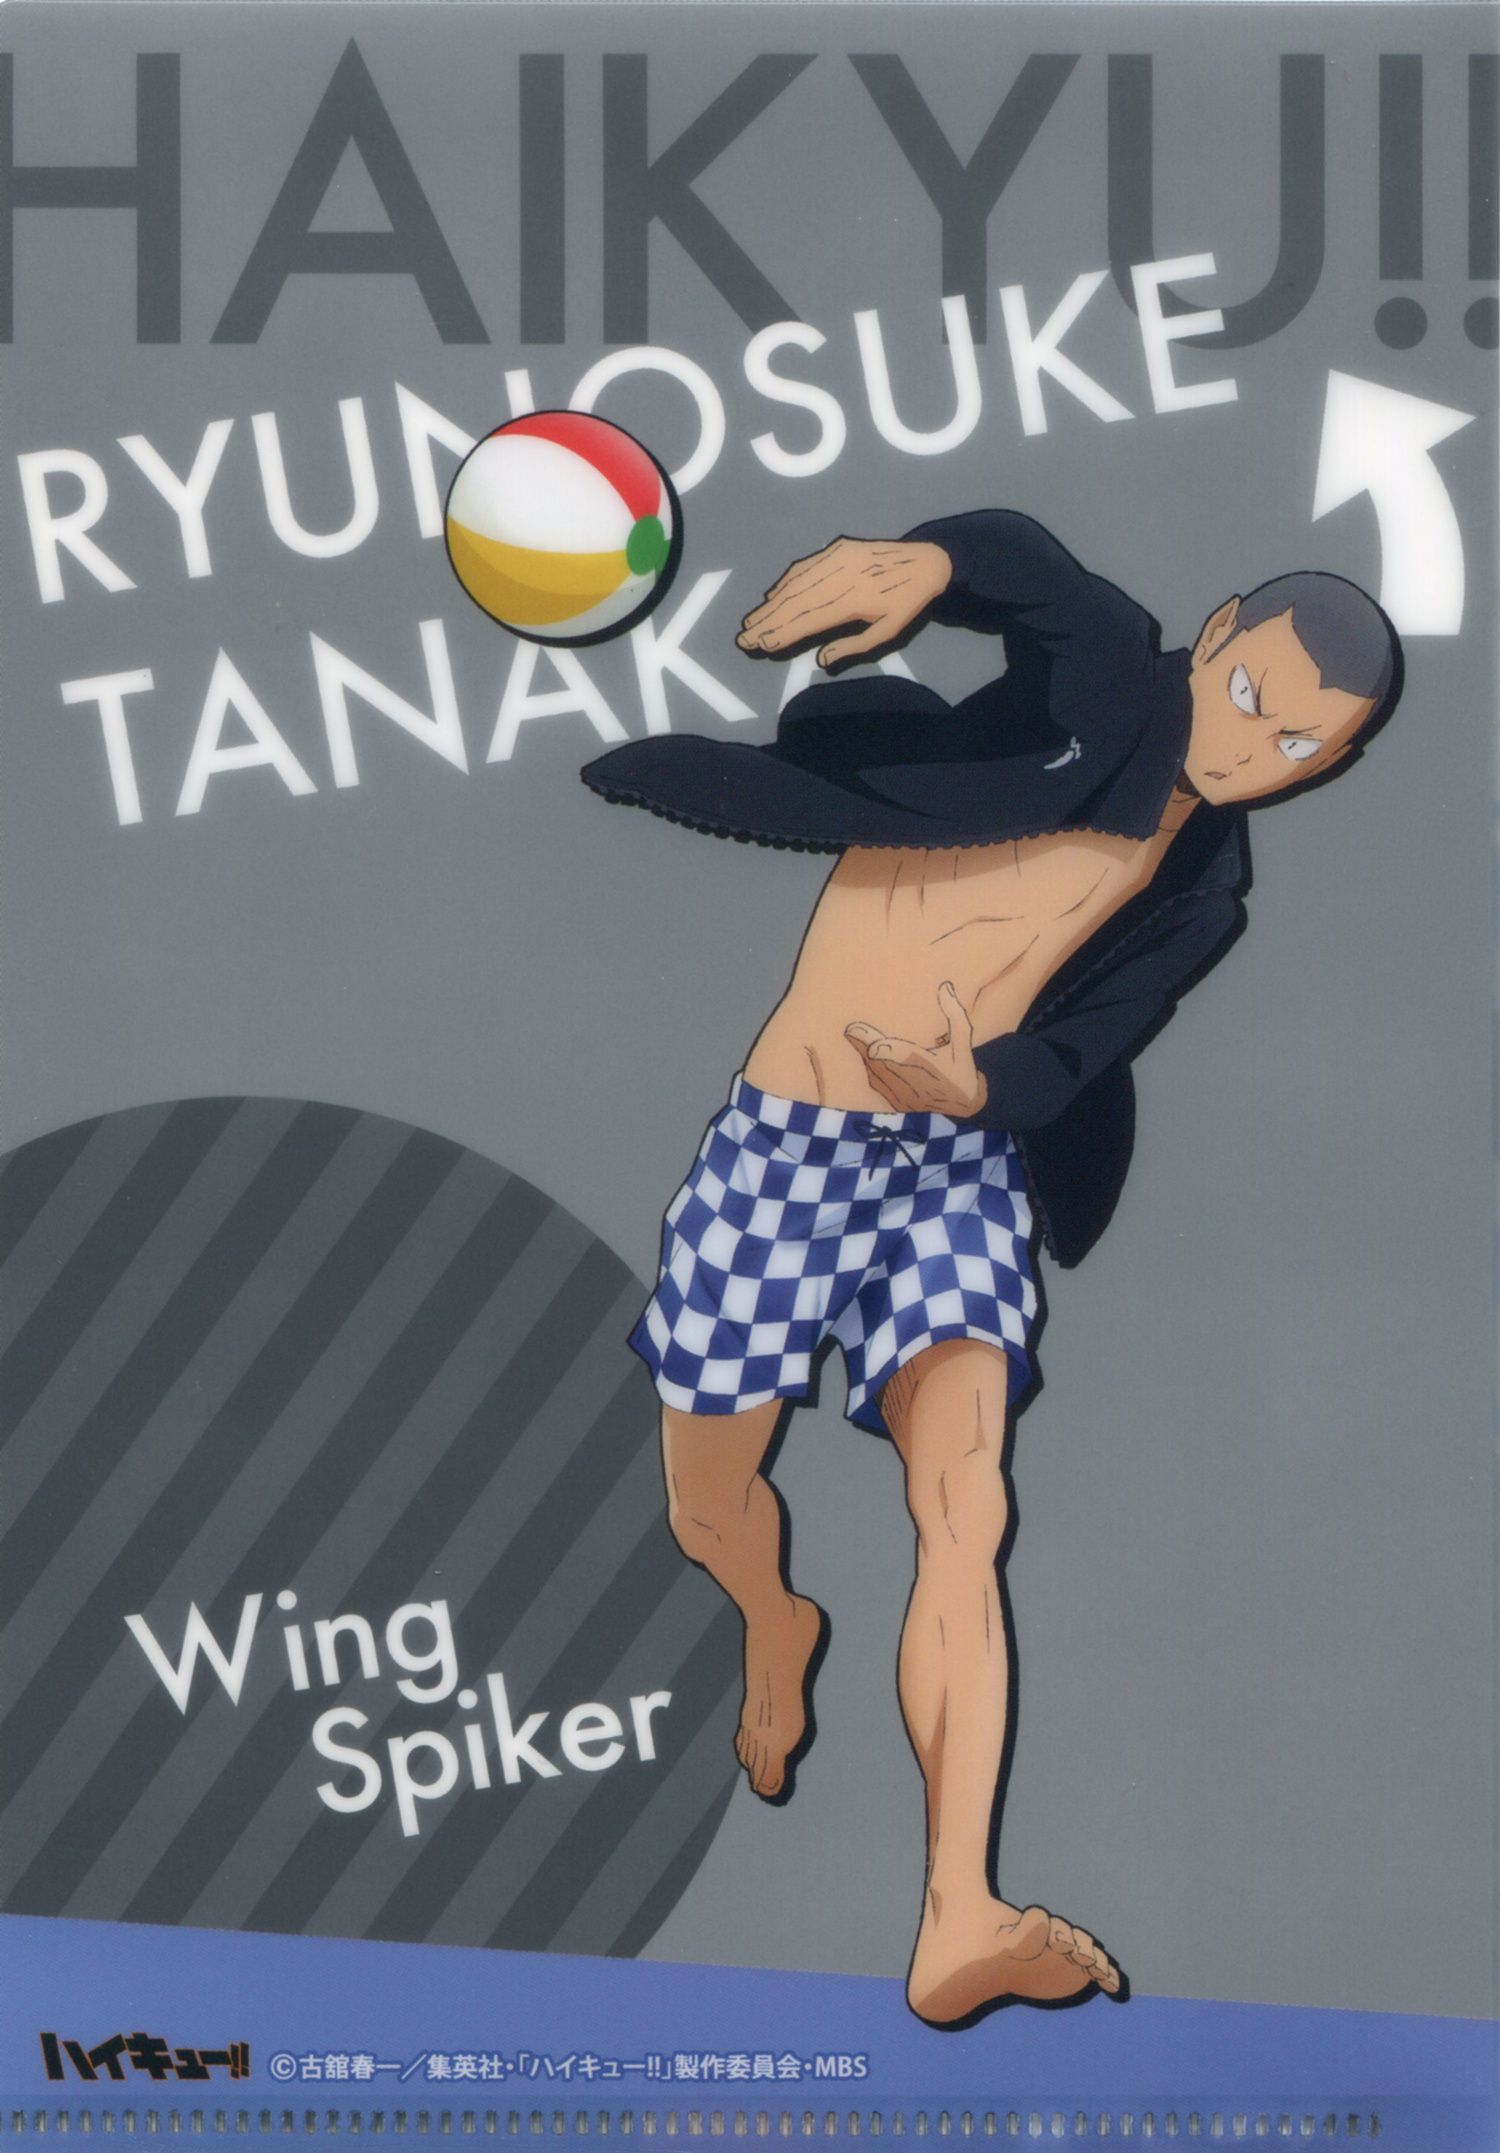 Haikyuu, Tanaka haikyuu, Tanaka ryuunosuke